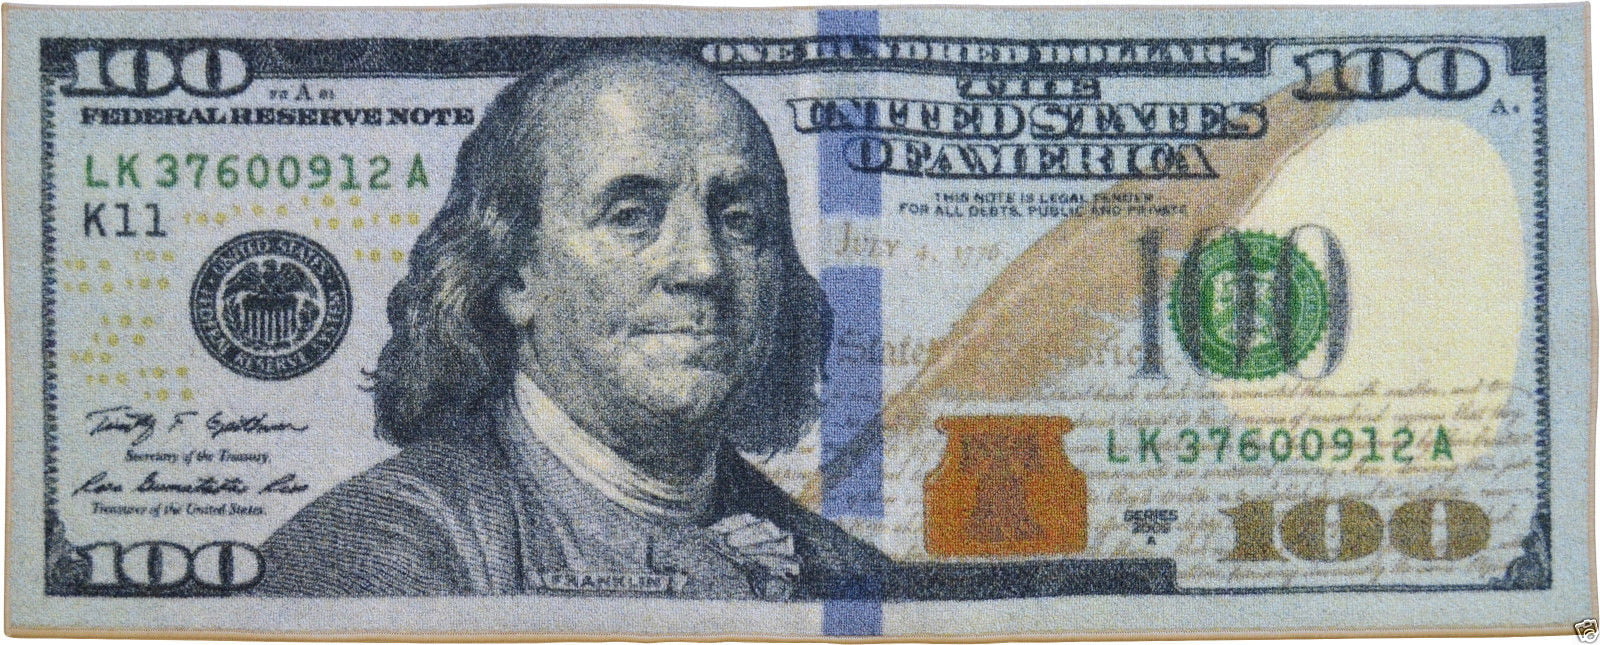 Giant Big Bucks Cash Jumbo $100 Hundred Dollar Bill Pimp Accessory 